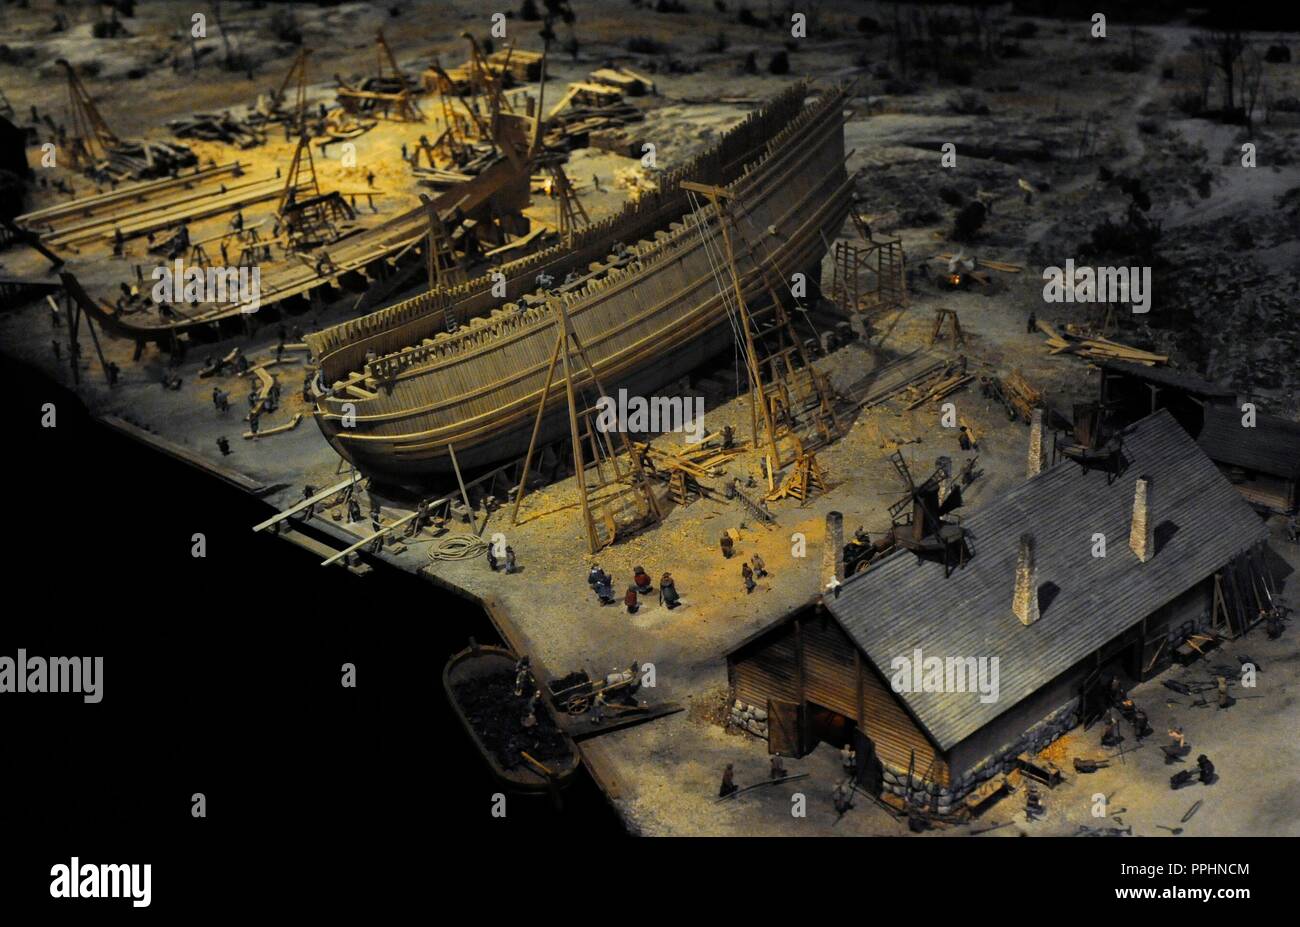 The Stockholm shipward in april 1627, the largest naval base and shipyard in Sweden. Model. Vasa Museum. Stockholm. Sweden. Stock Photo